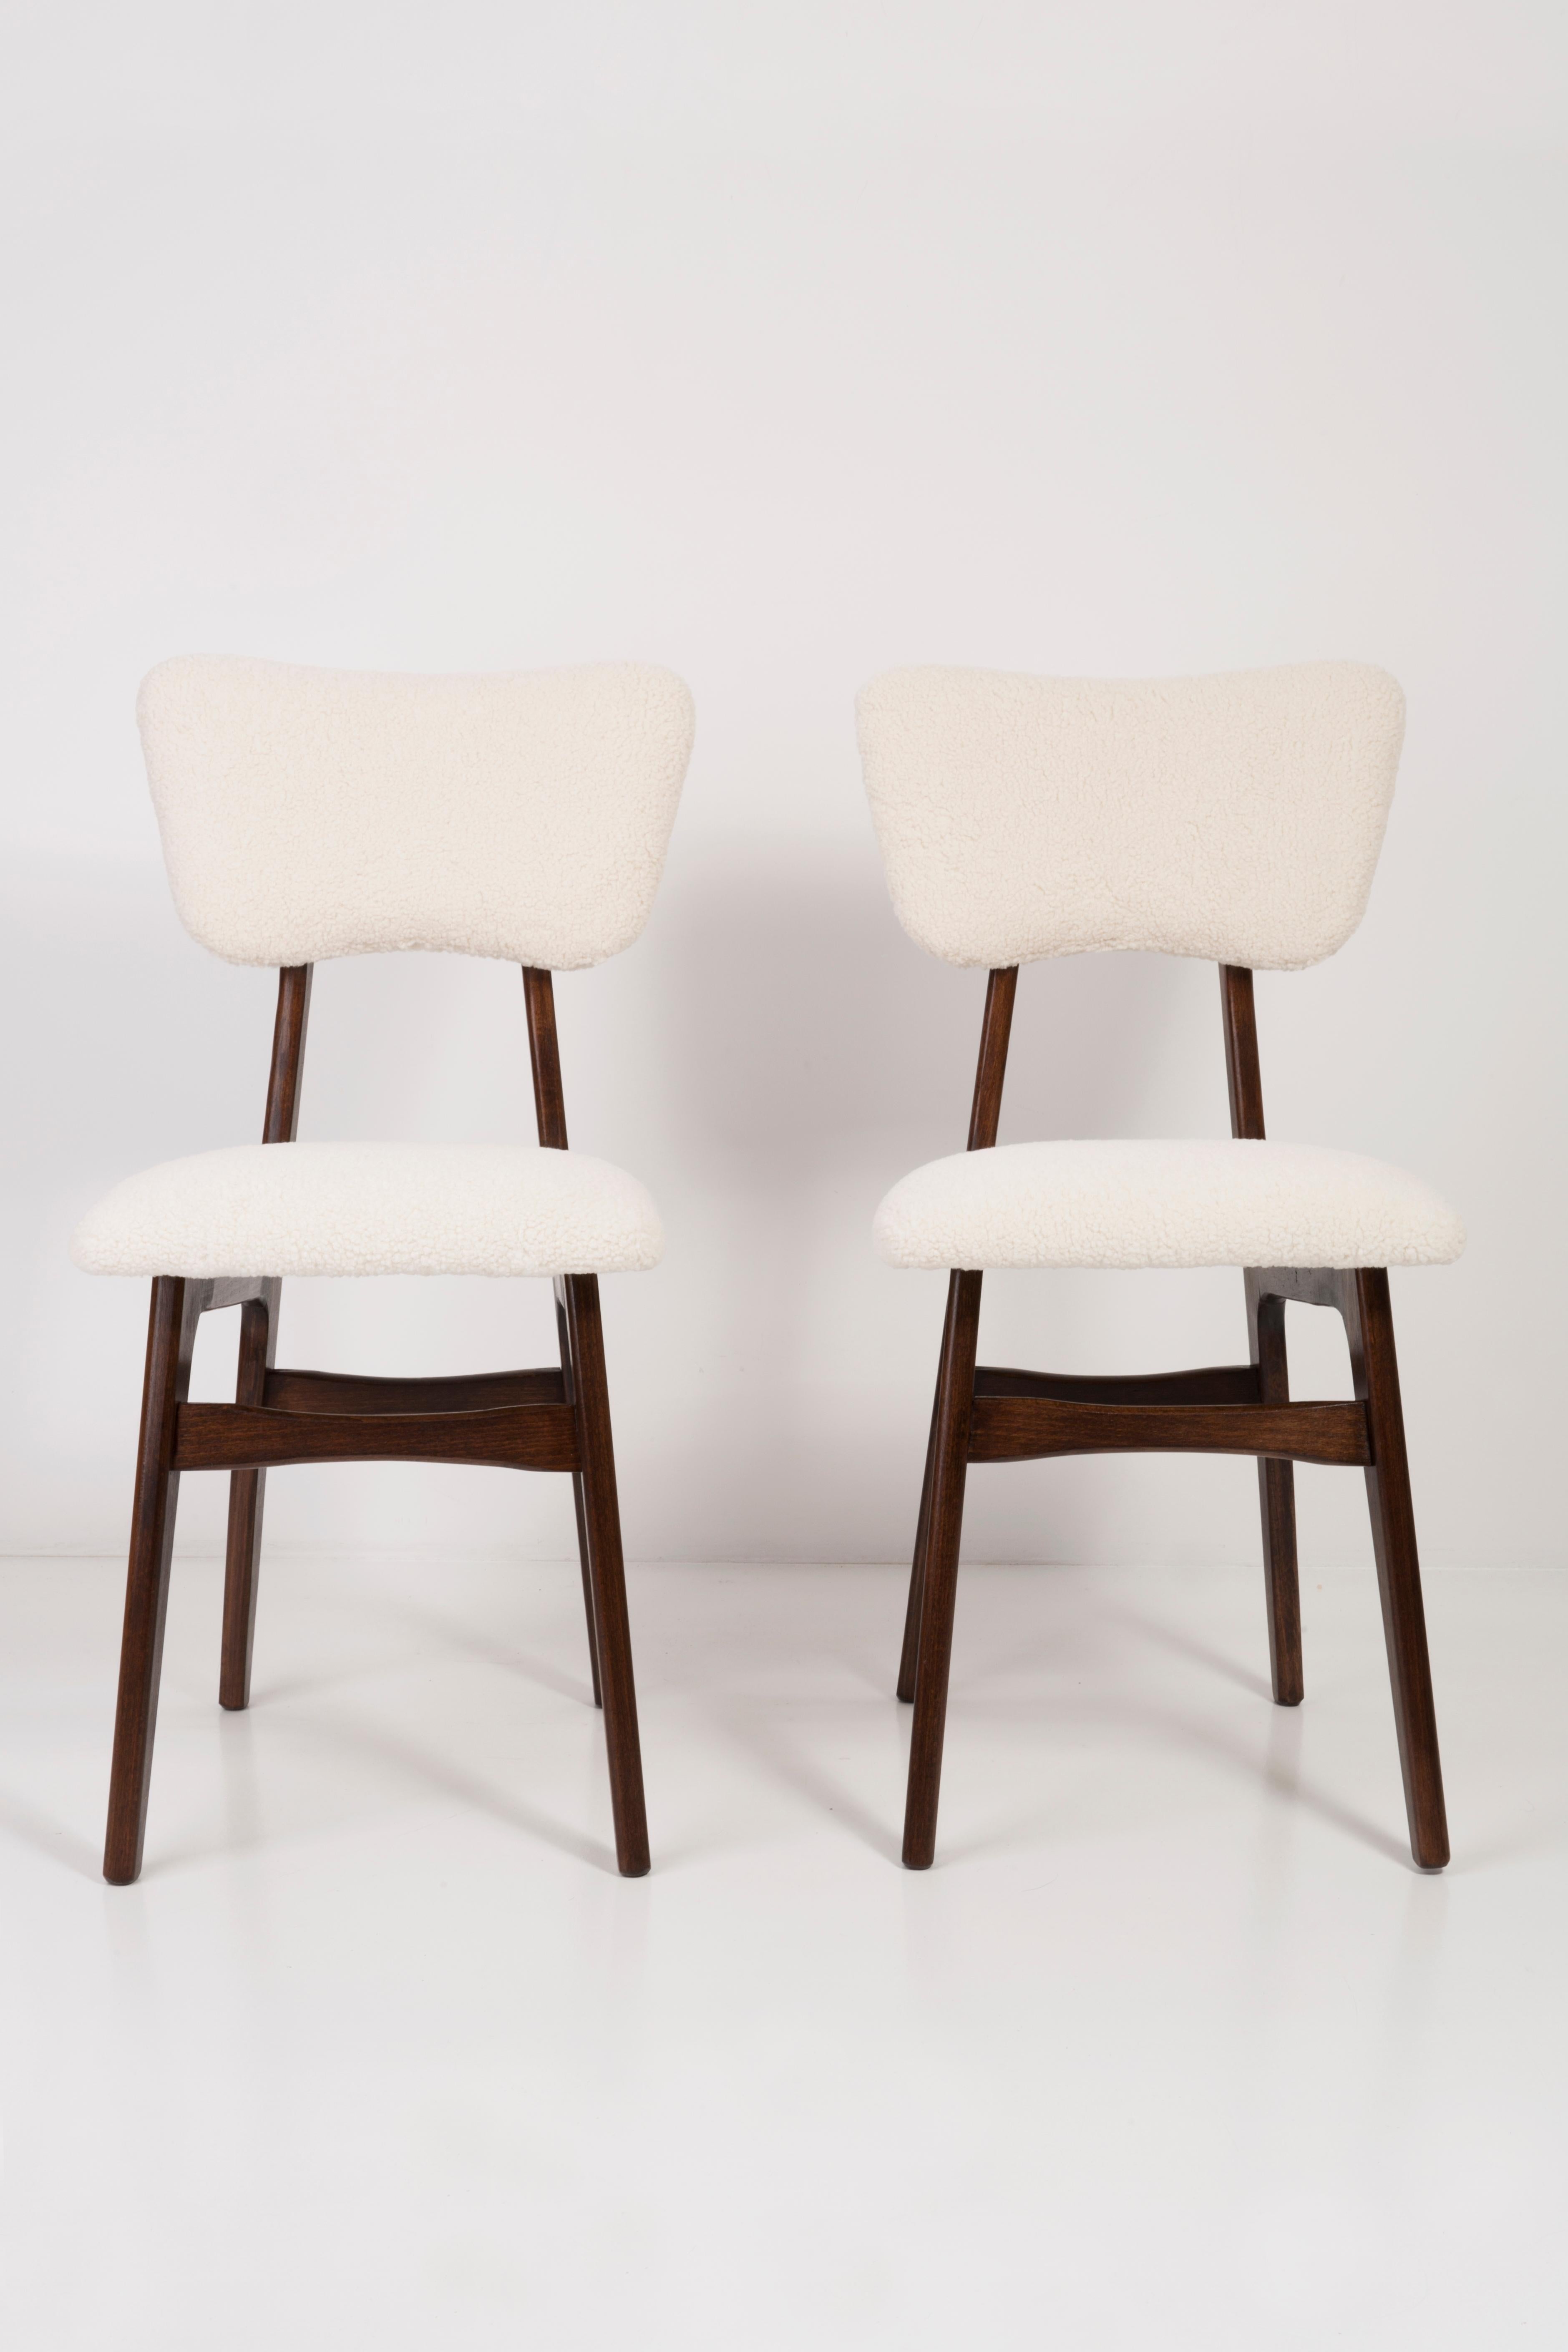 20th Century Light Crème Boucle Chair, 1960s For Sale 2